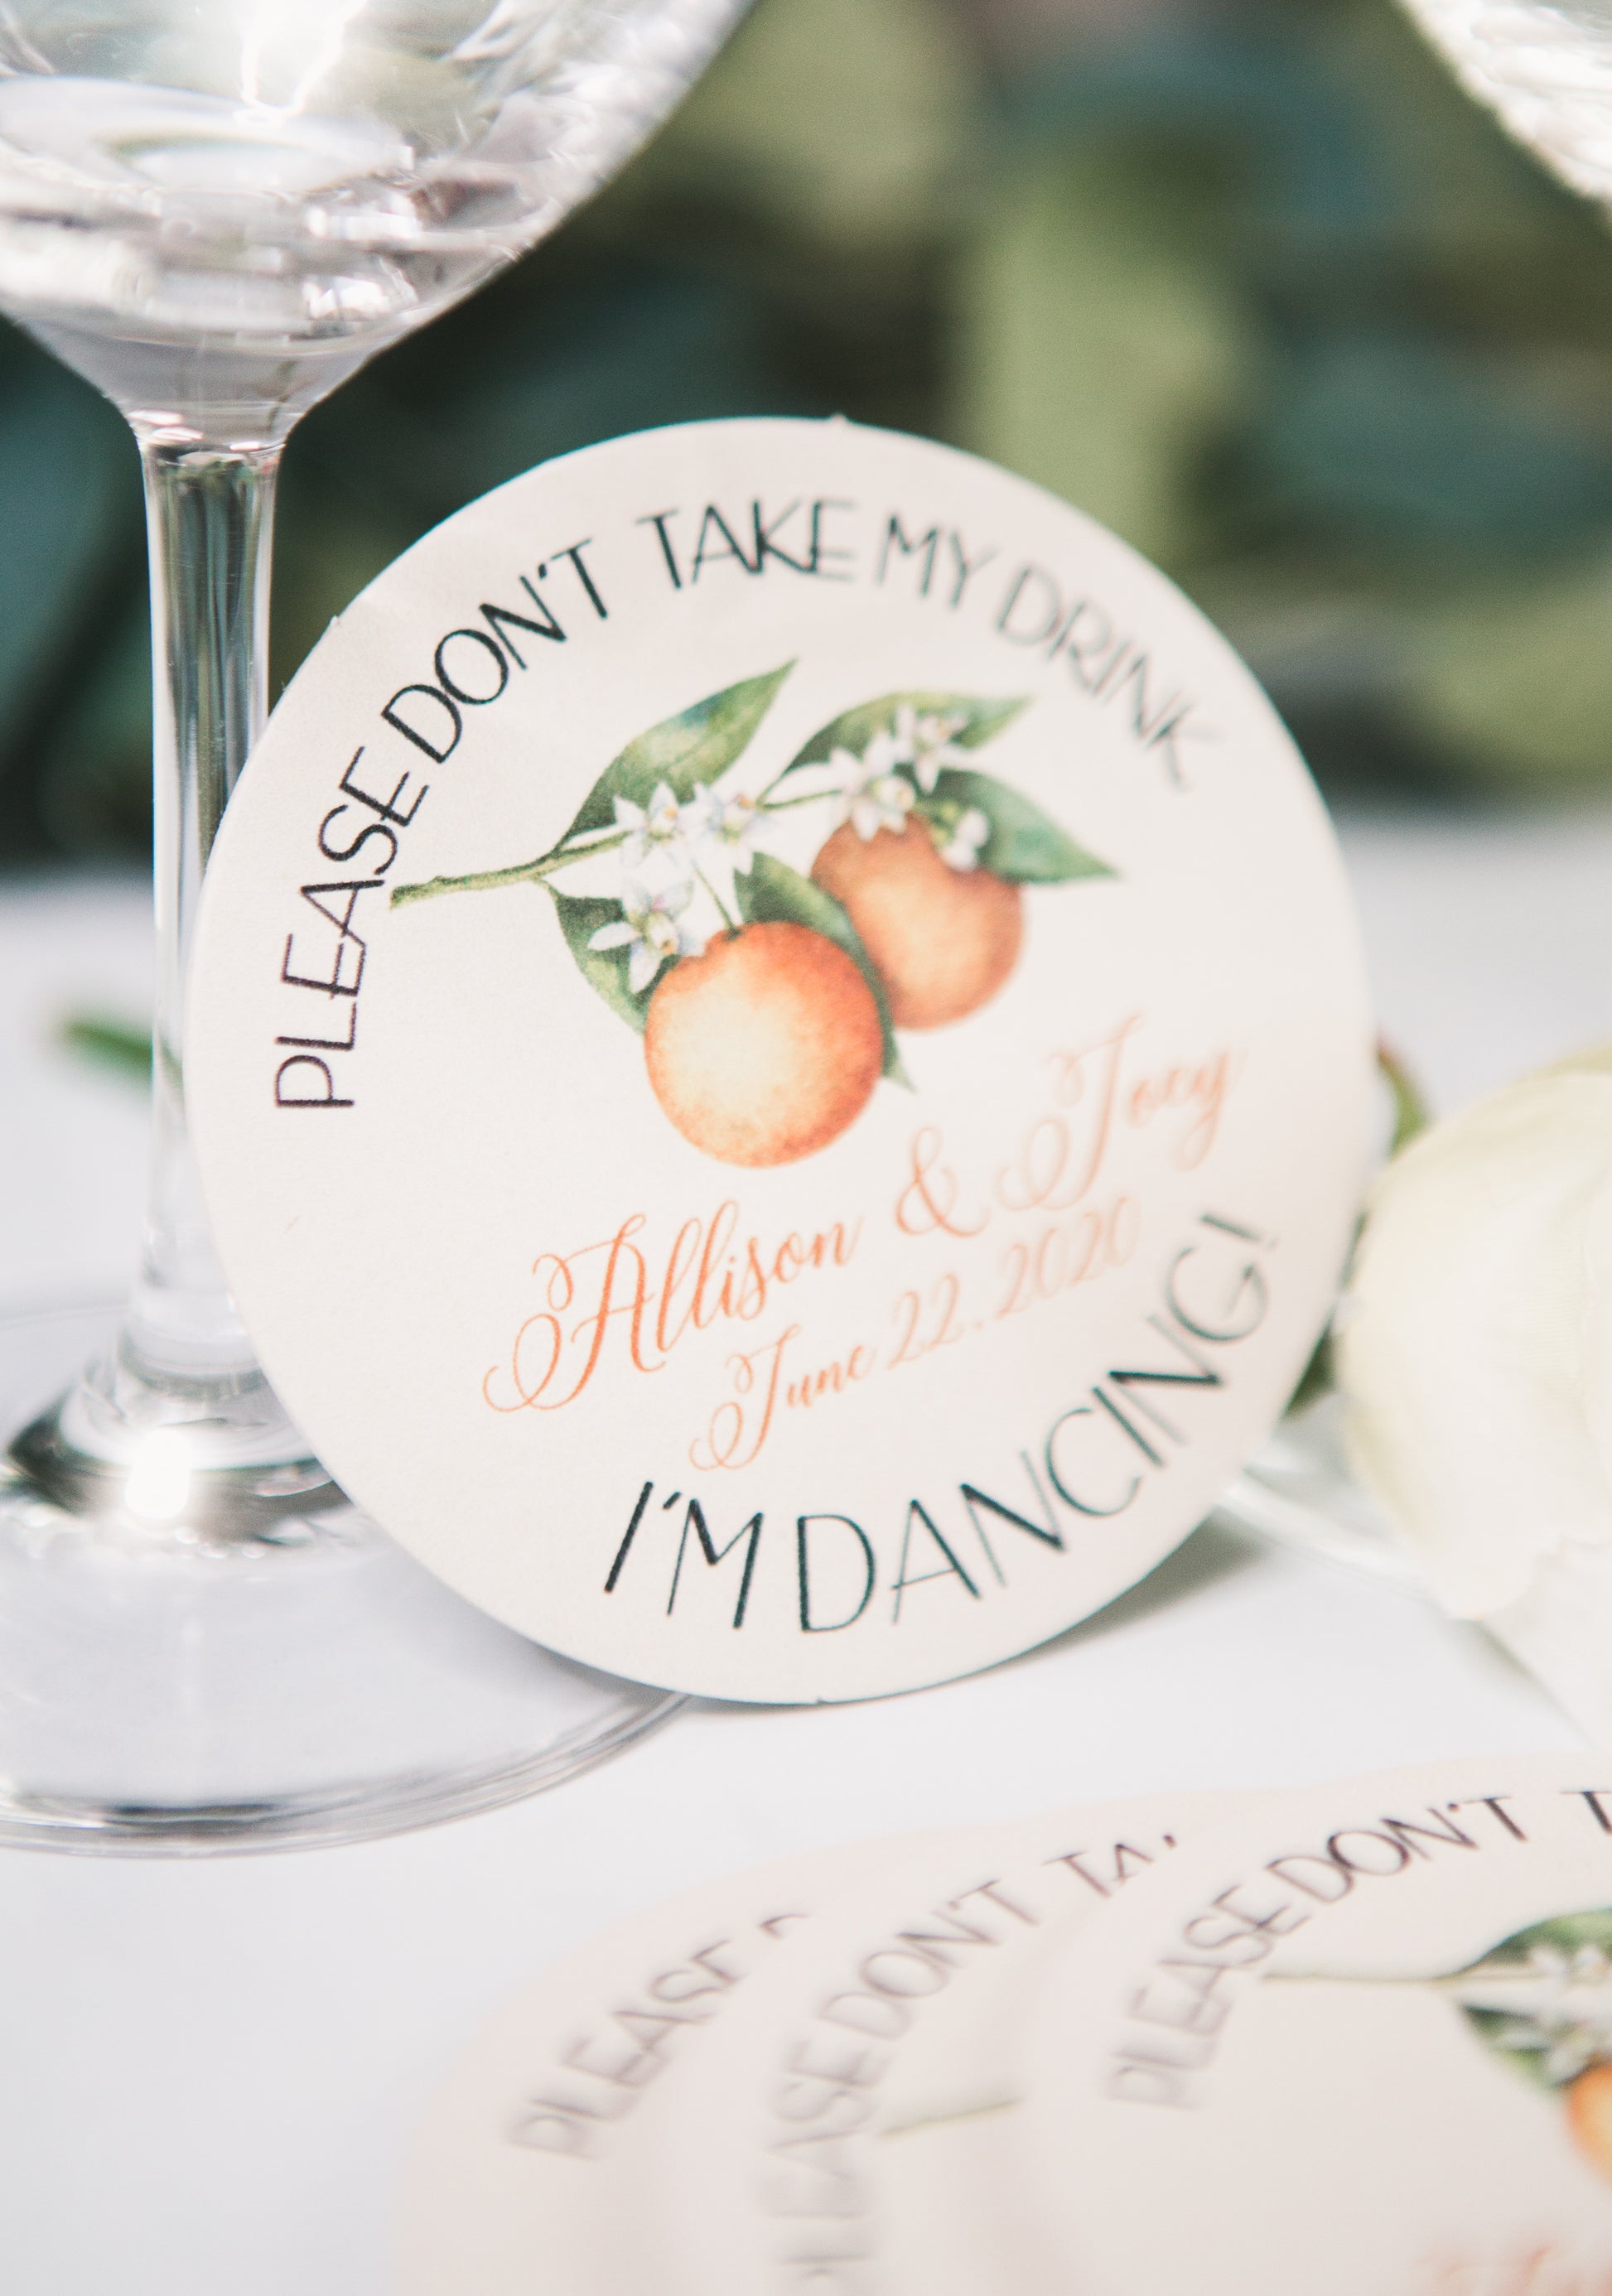 Don't Take My Drink Wedding Coasters - Wedding Decor Gifts